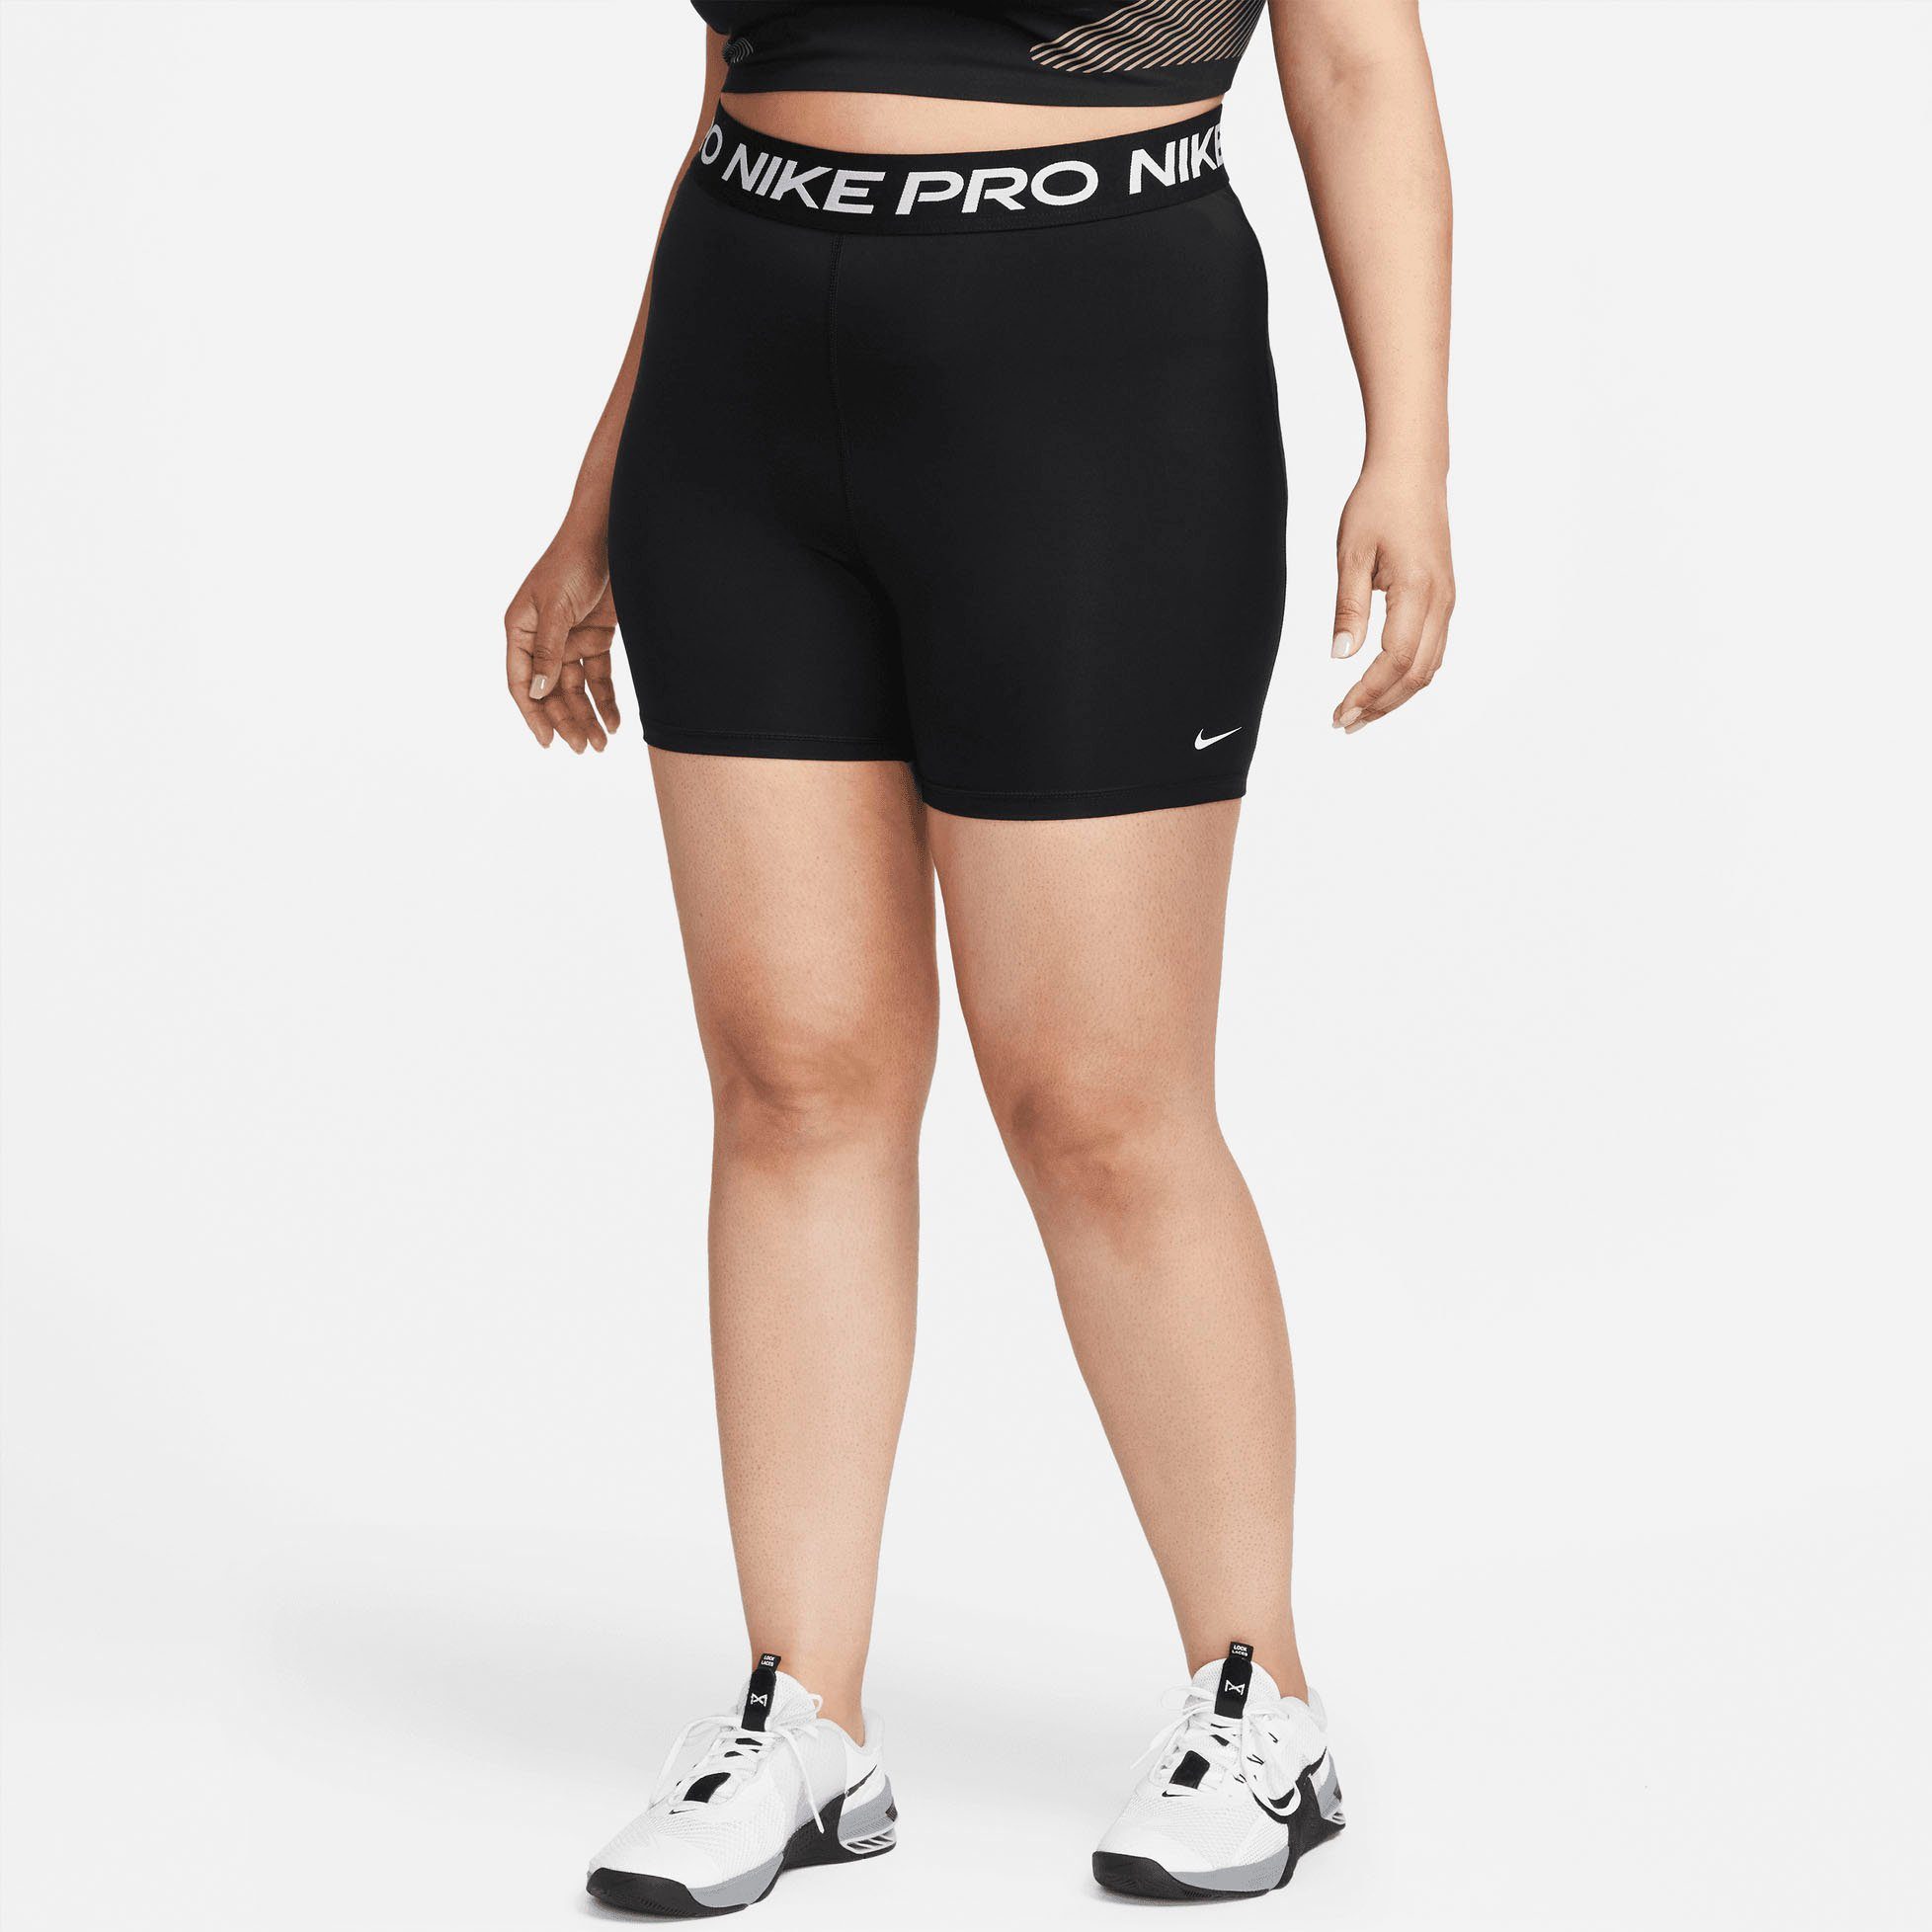 Nike Trainingstights Pro Women's " Шорты (Plus Size)